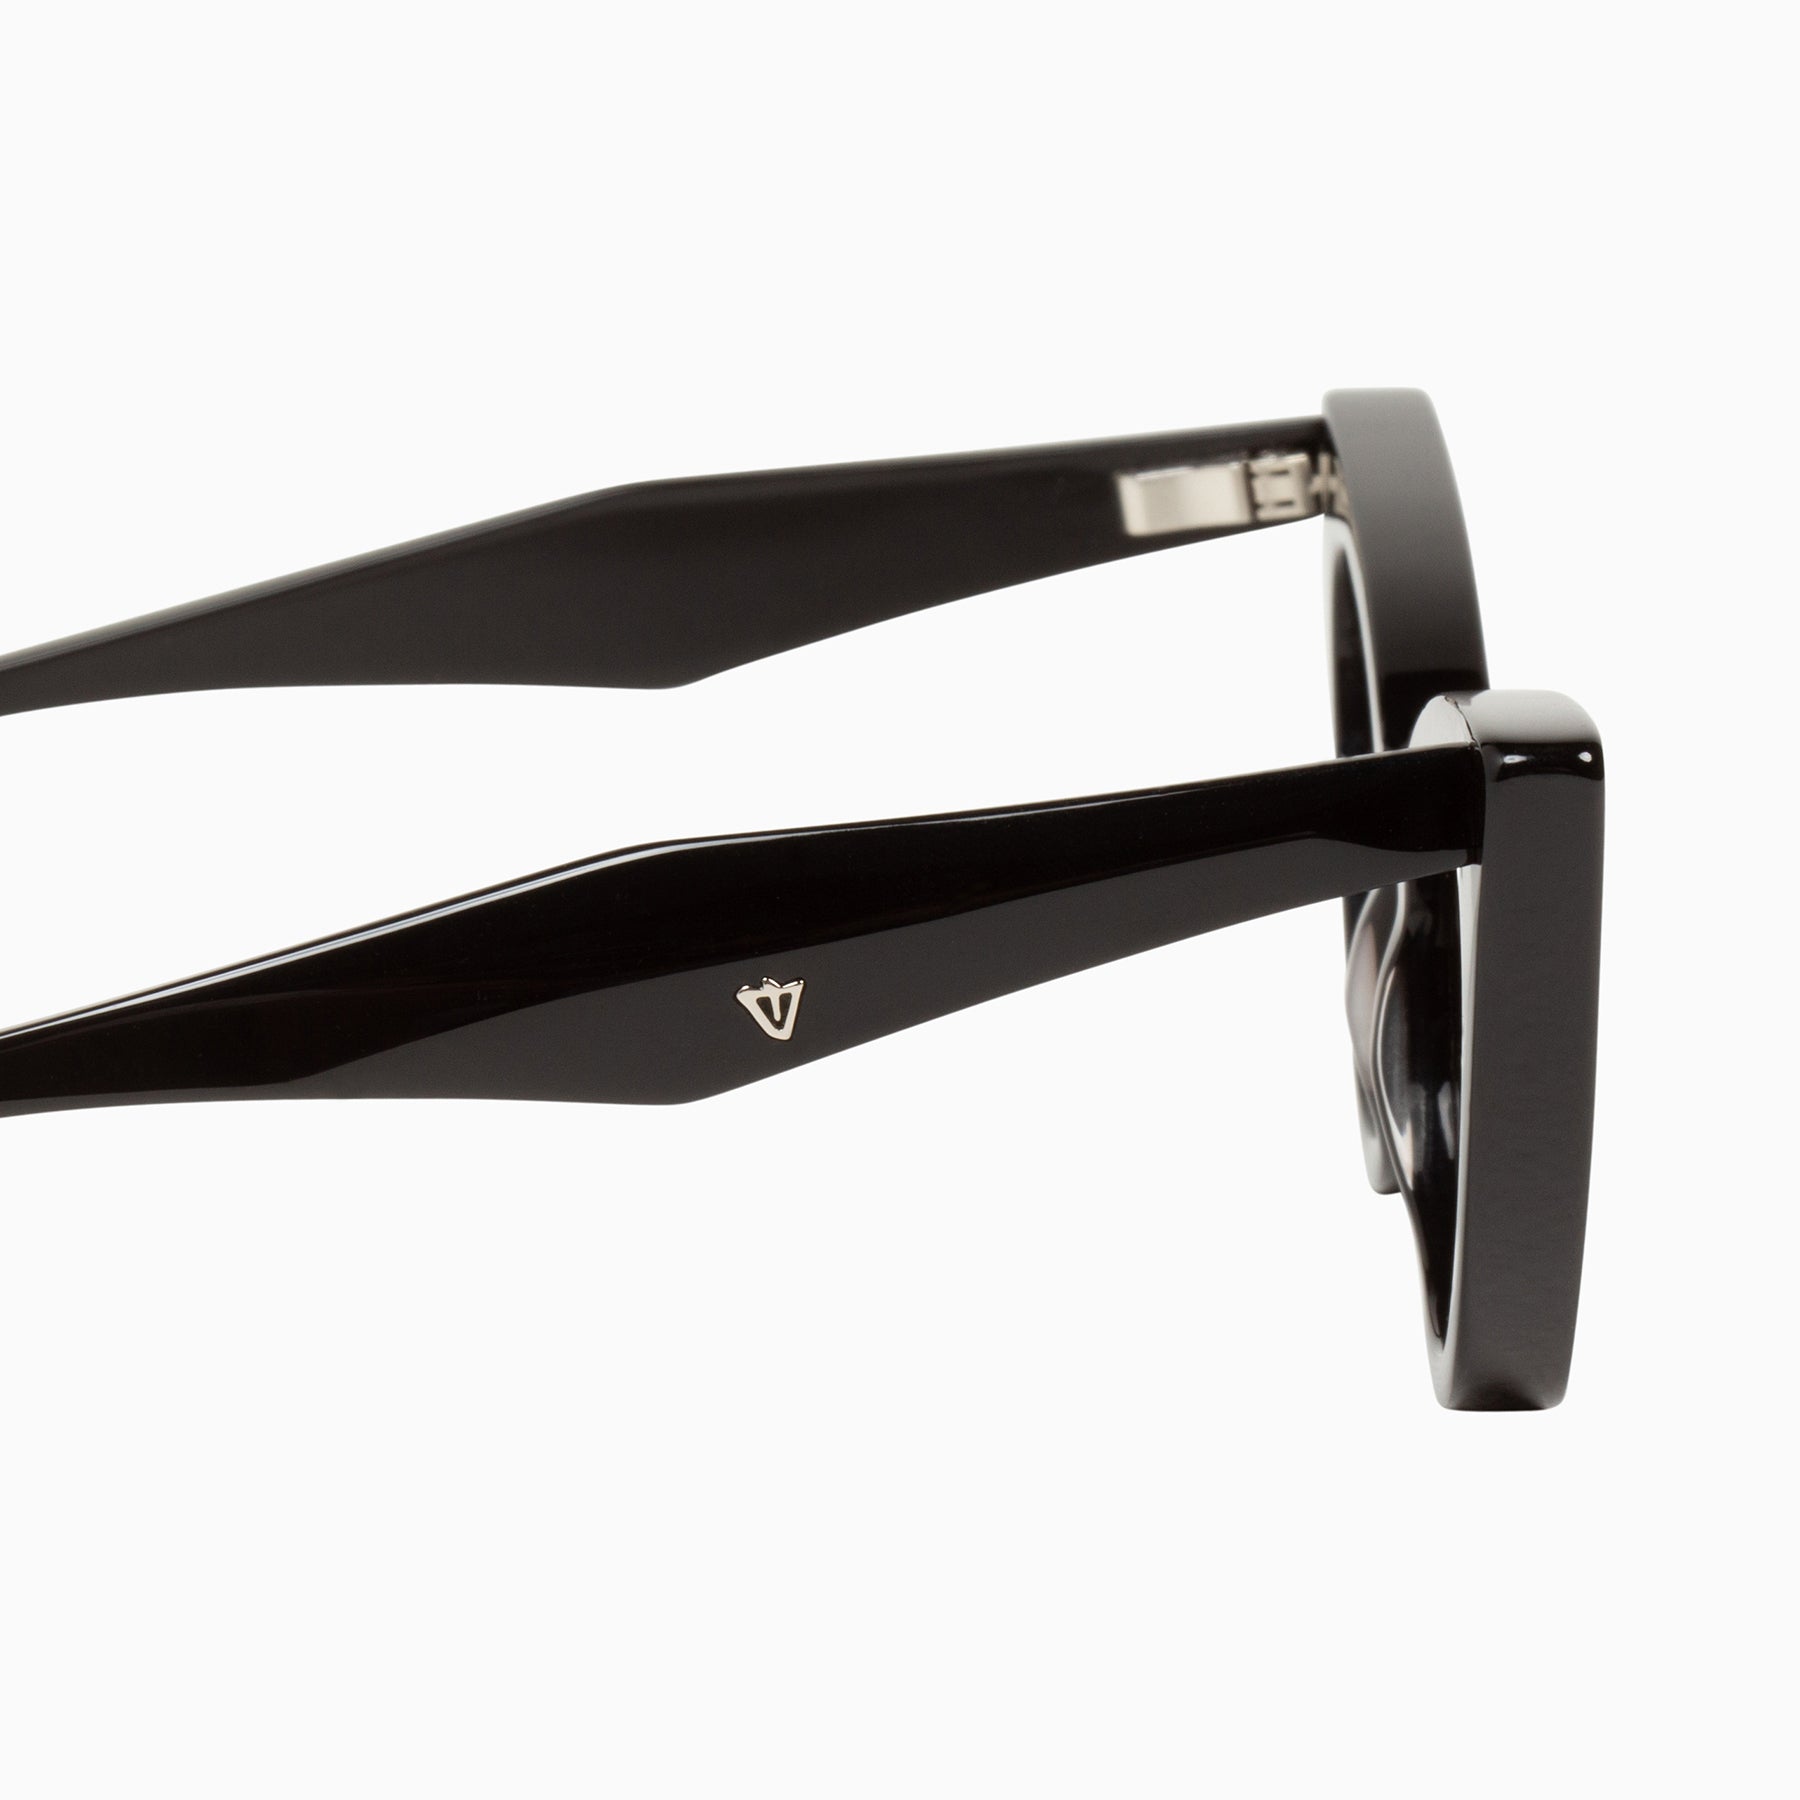 Sunglasses Men Designer Fashion Gold Metal Bar Dark Black Lens